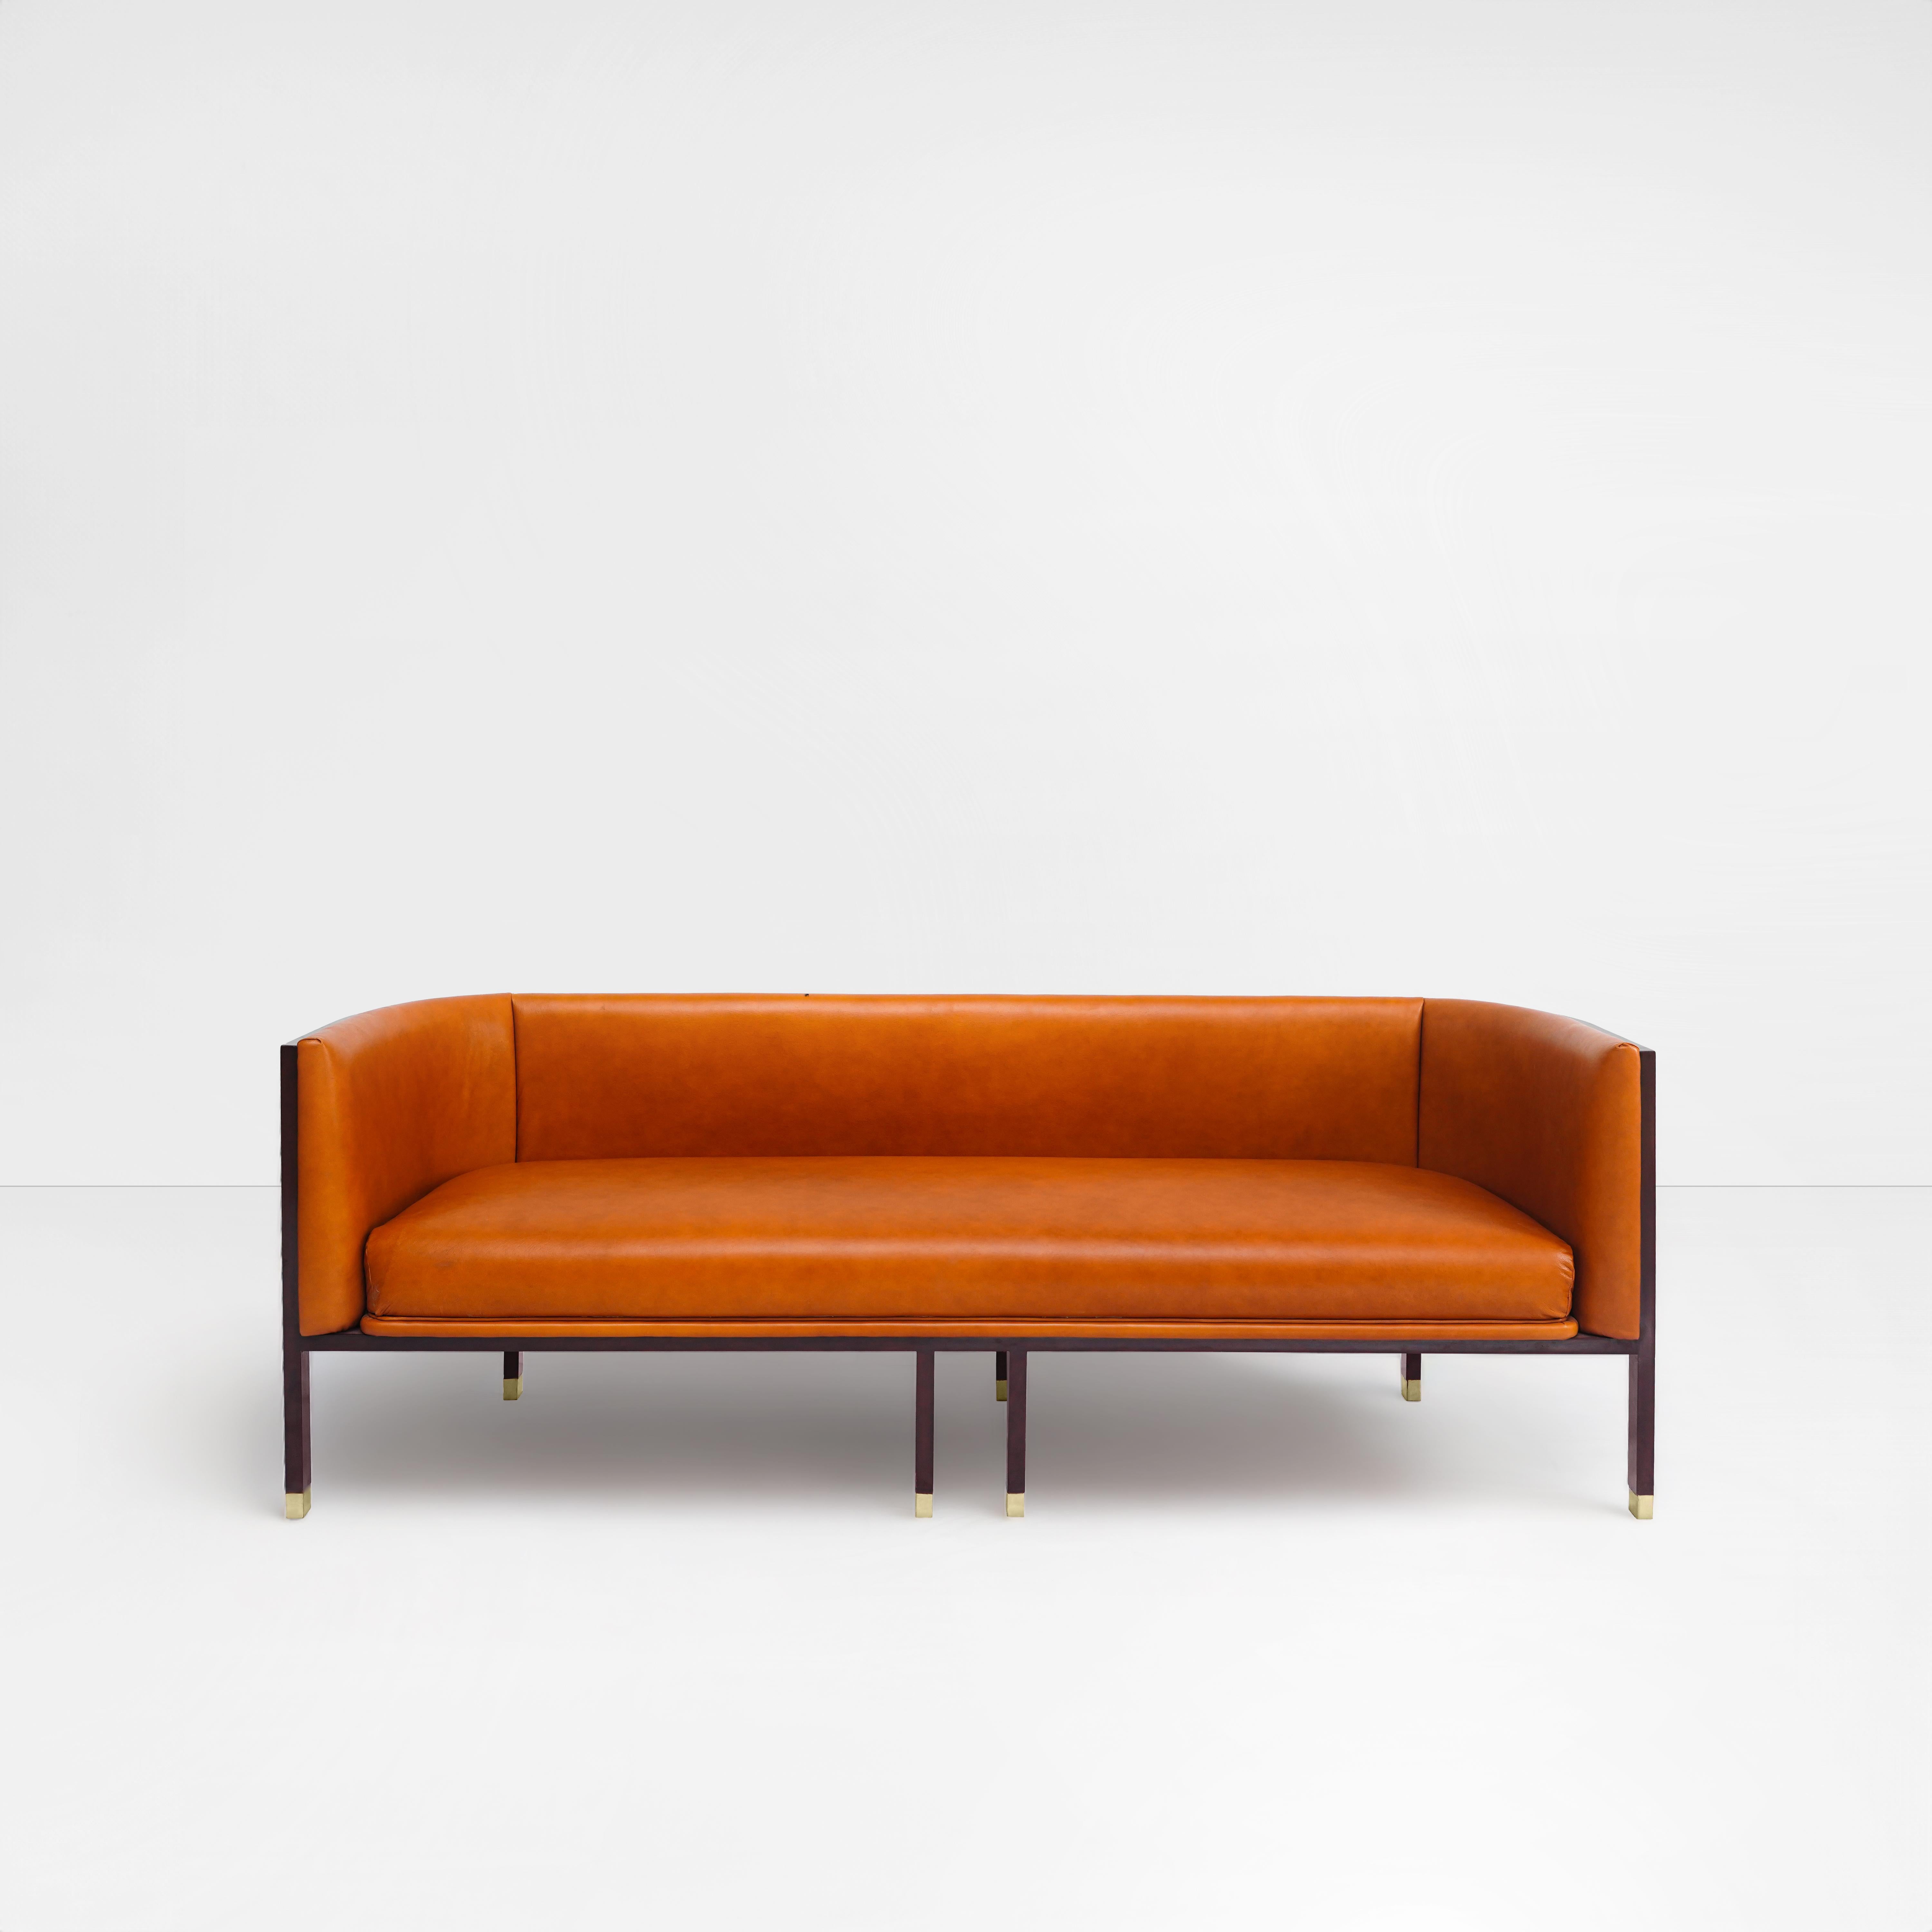 The Moderns sofa, Barrel sofa, round back chair, bold, modern, walnut wood